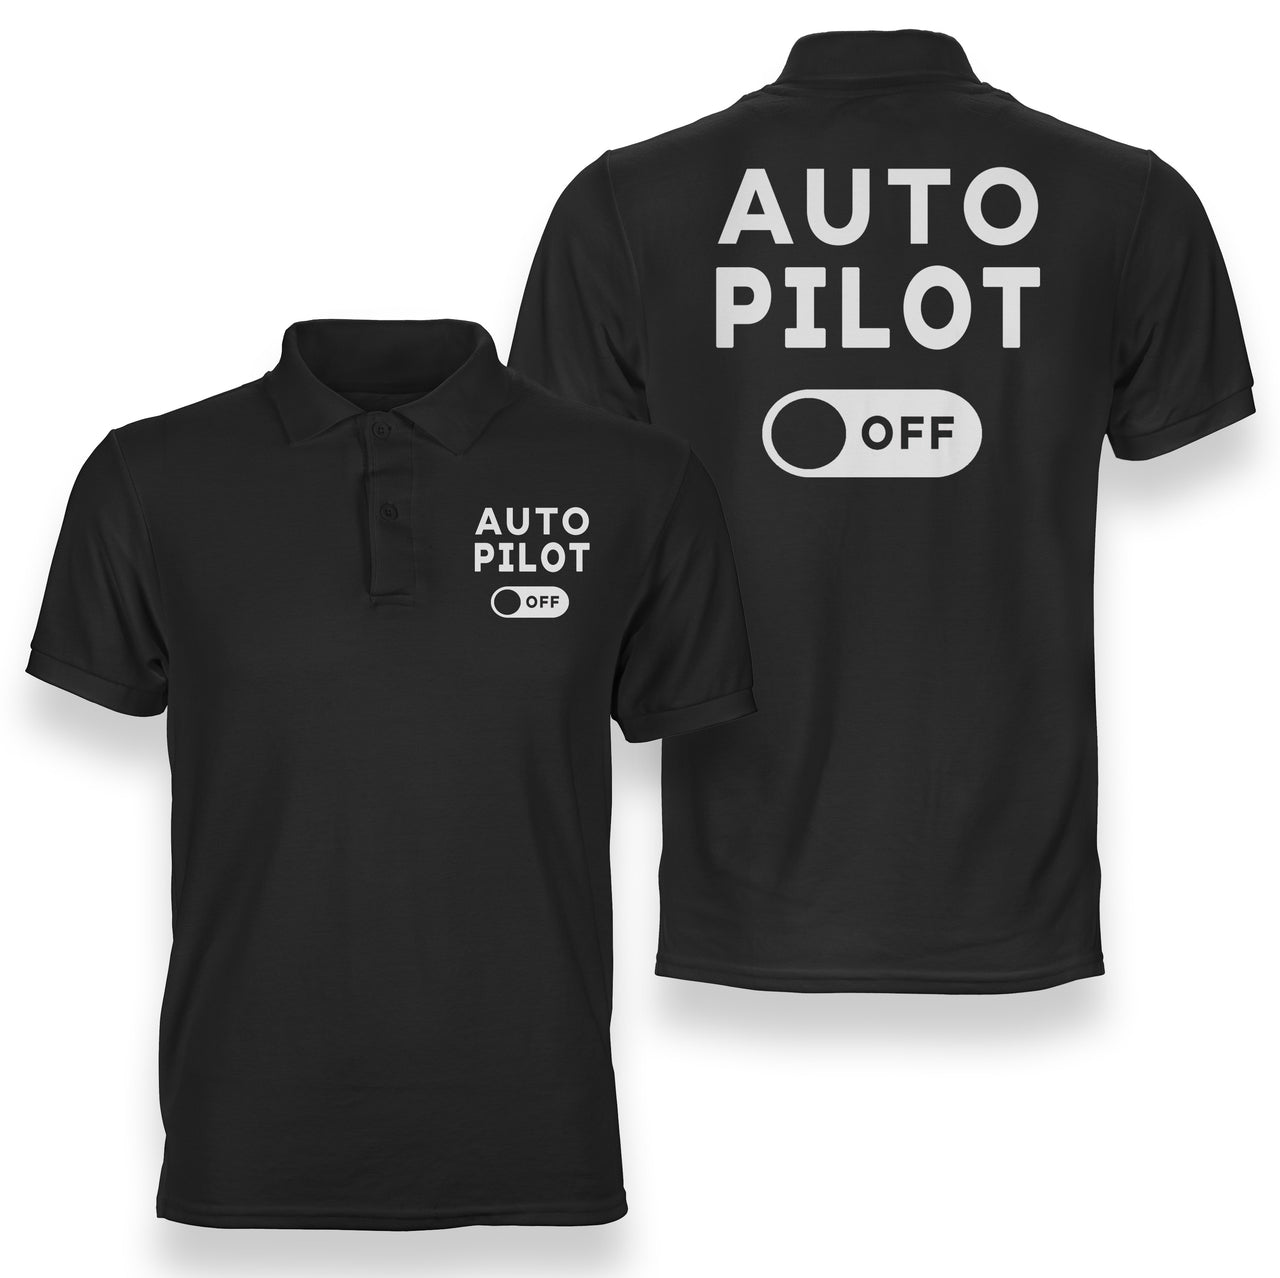 Auto Pilot Off Designed Double Side Polo T-Shirts